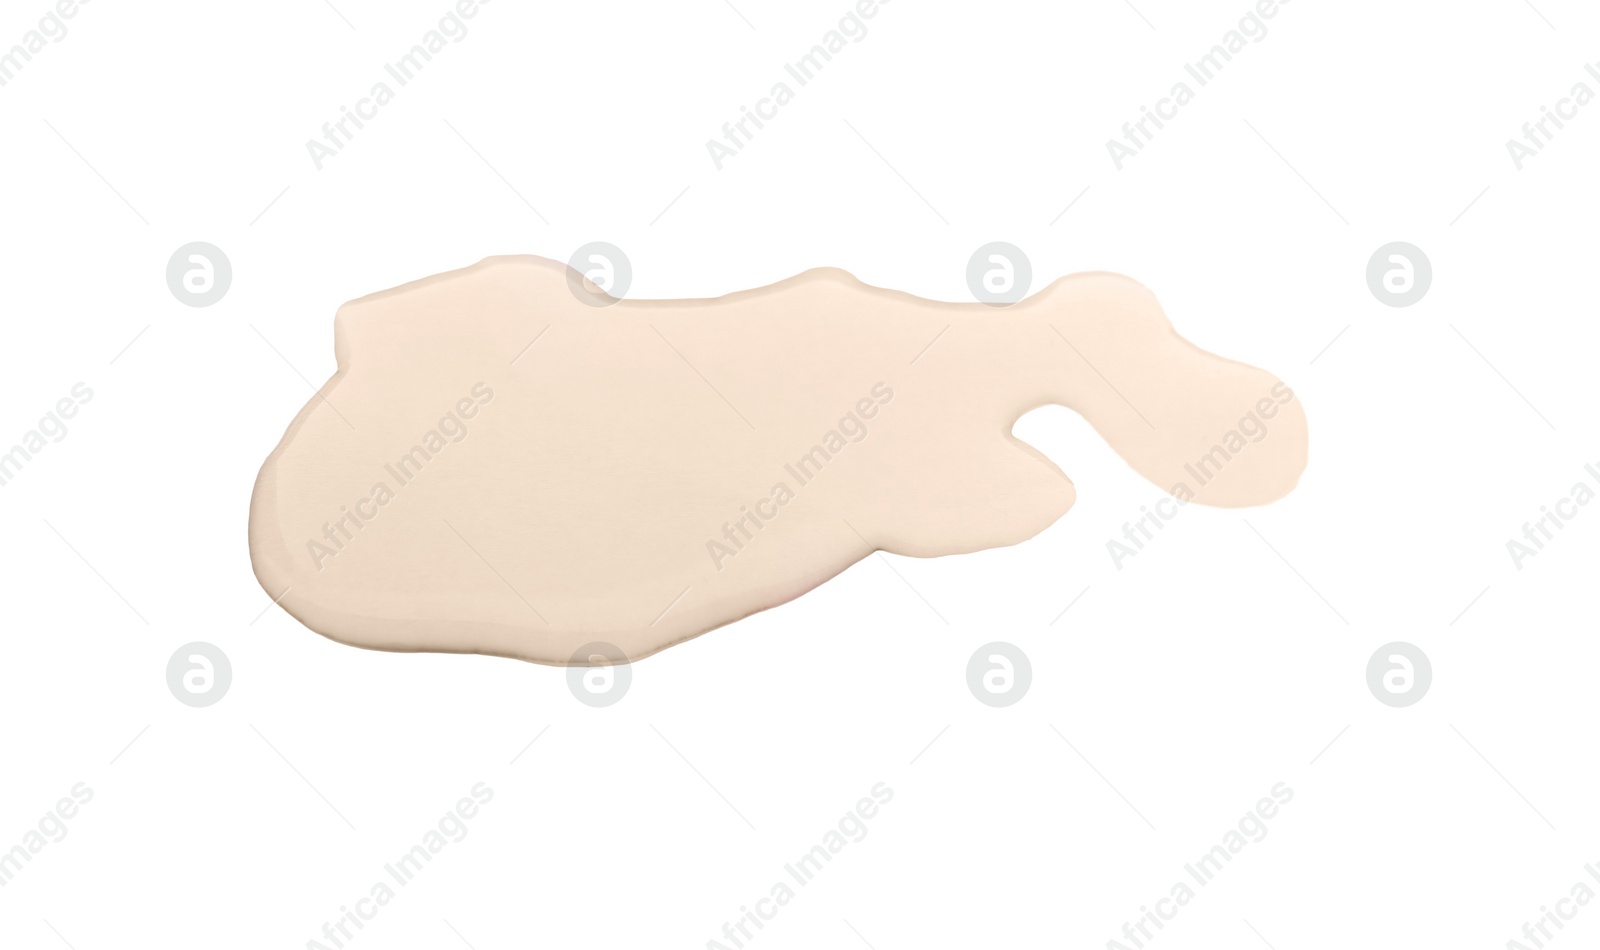 Photo of Puddle of aromatic liquid on white background